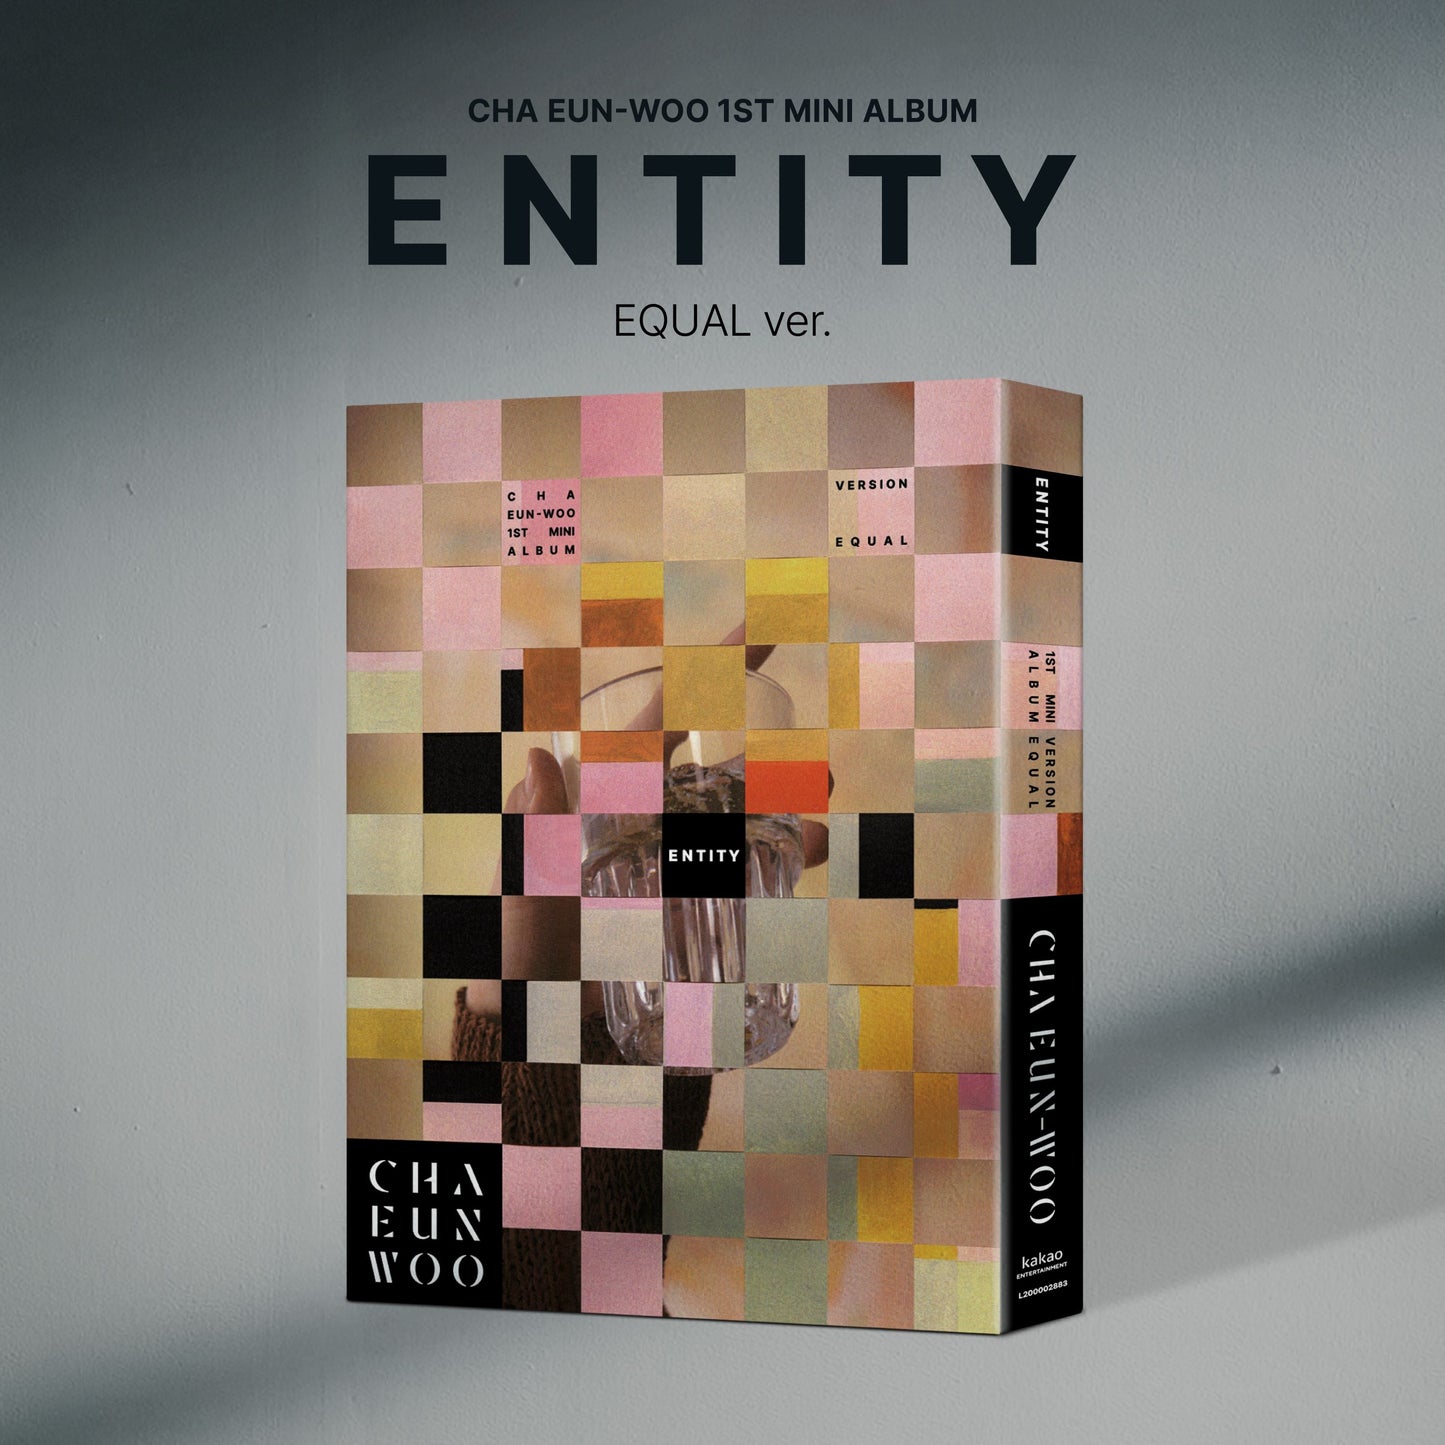 CHA EUN-WOO 1ST MINI ALBUM 'ENTITY' EQAUL VERSION COVER